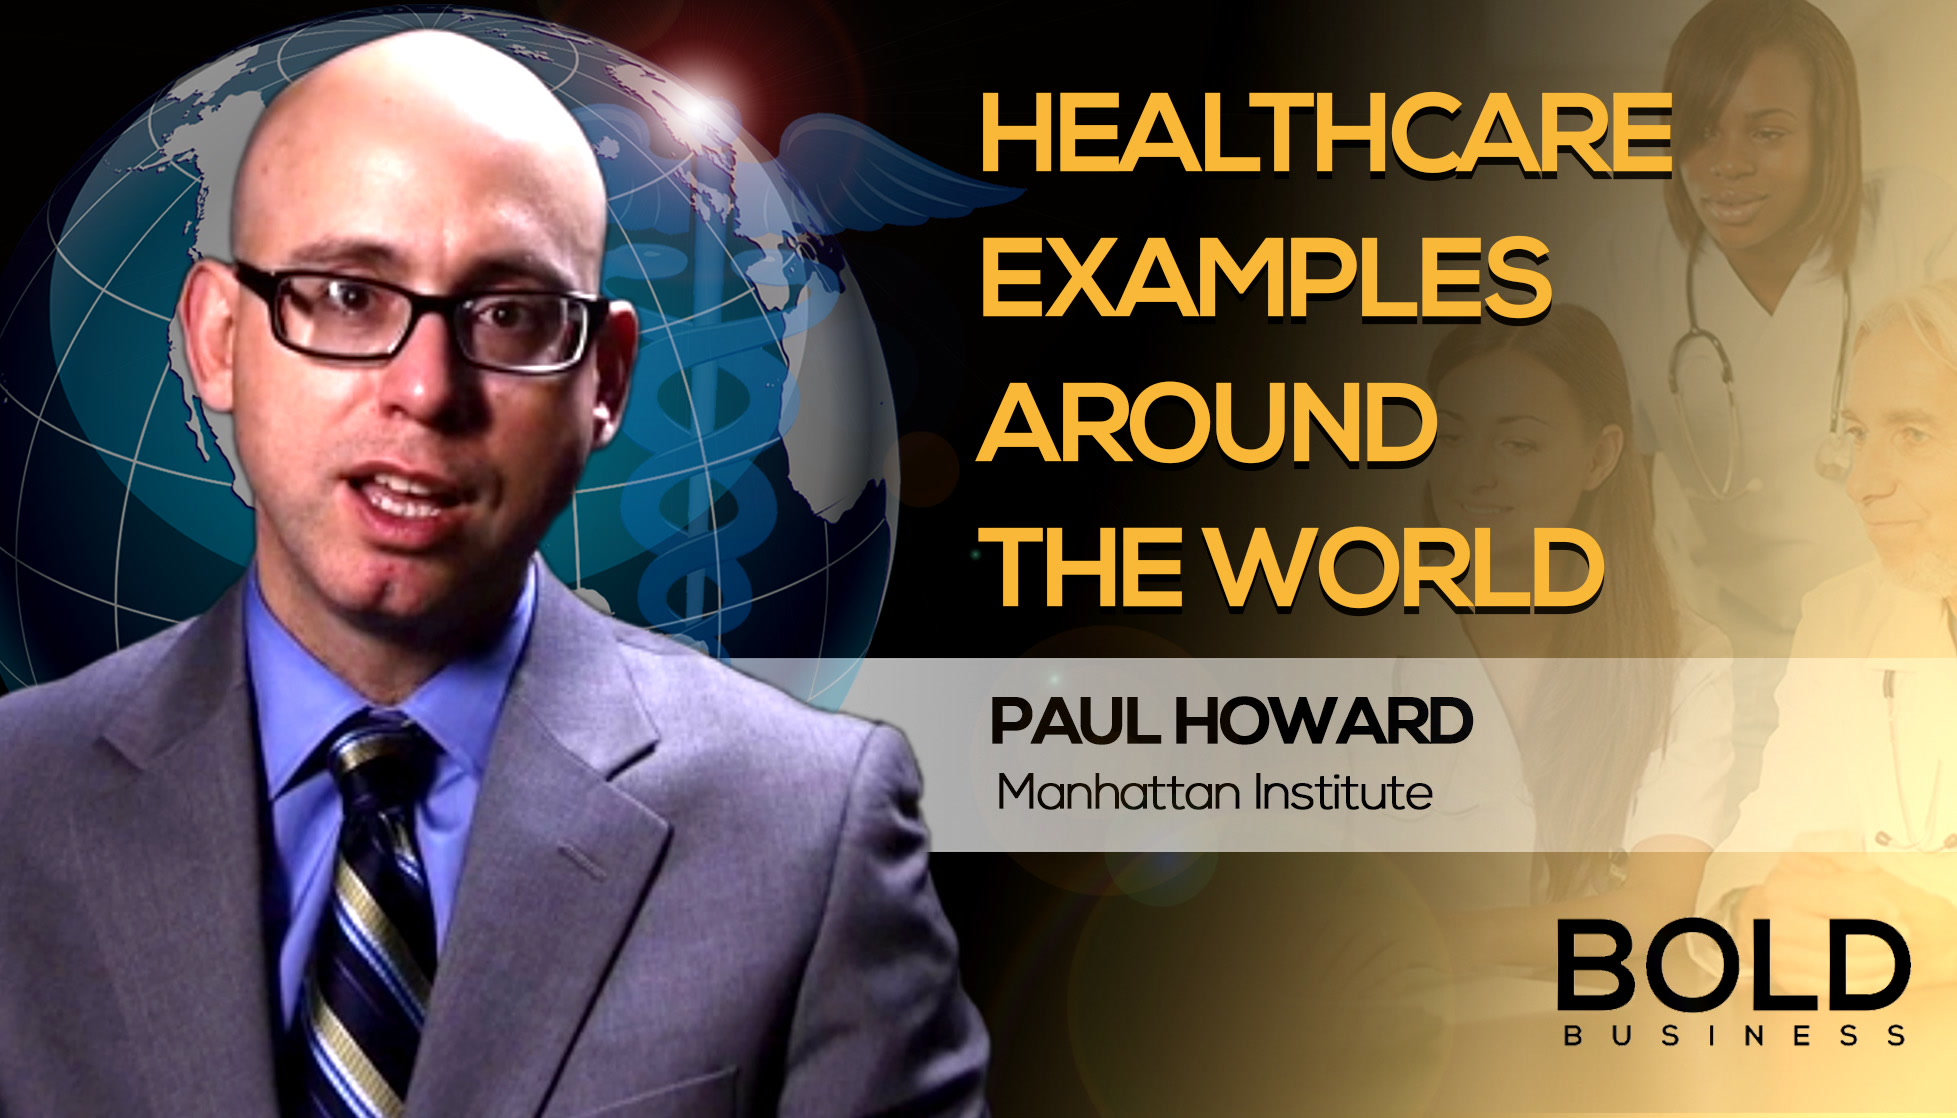 Paul Howard: Healthcare Around the World